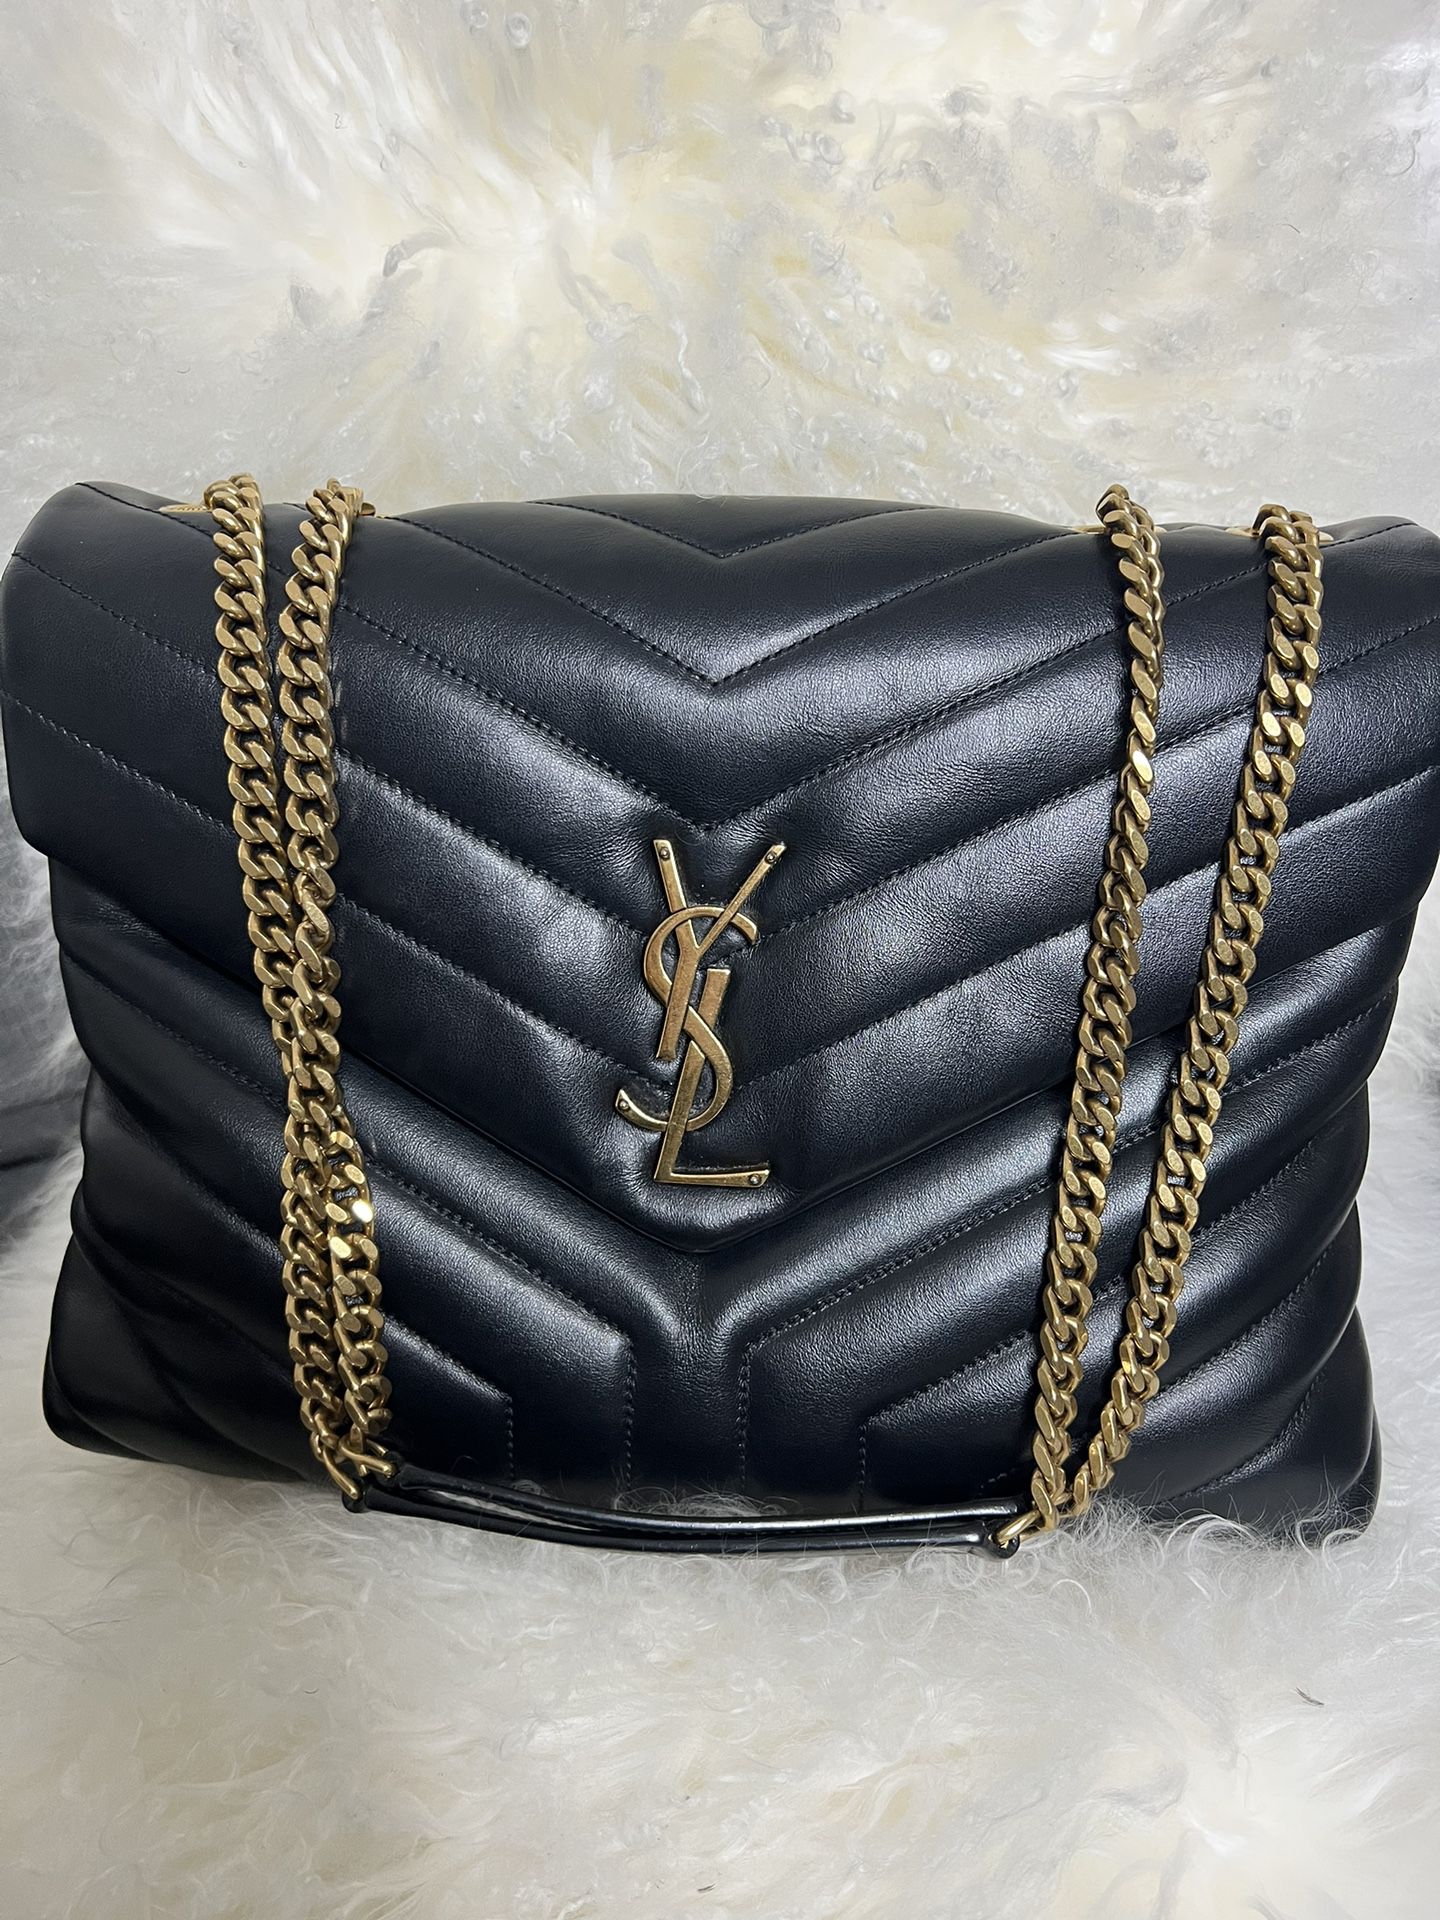 Brand New YSL Saint Laurent Medium Niki Bag for Sale in Boston, MA - OfferUp